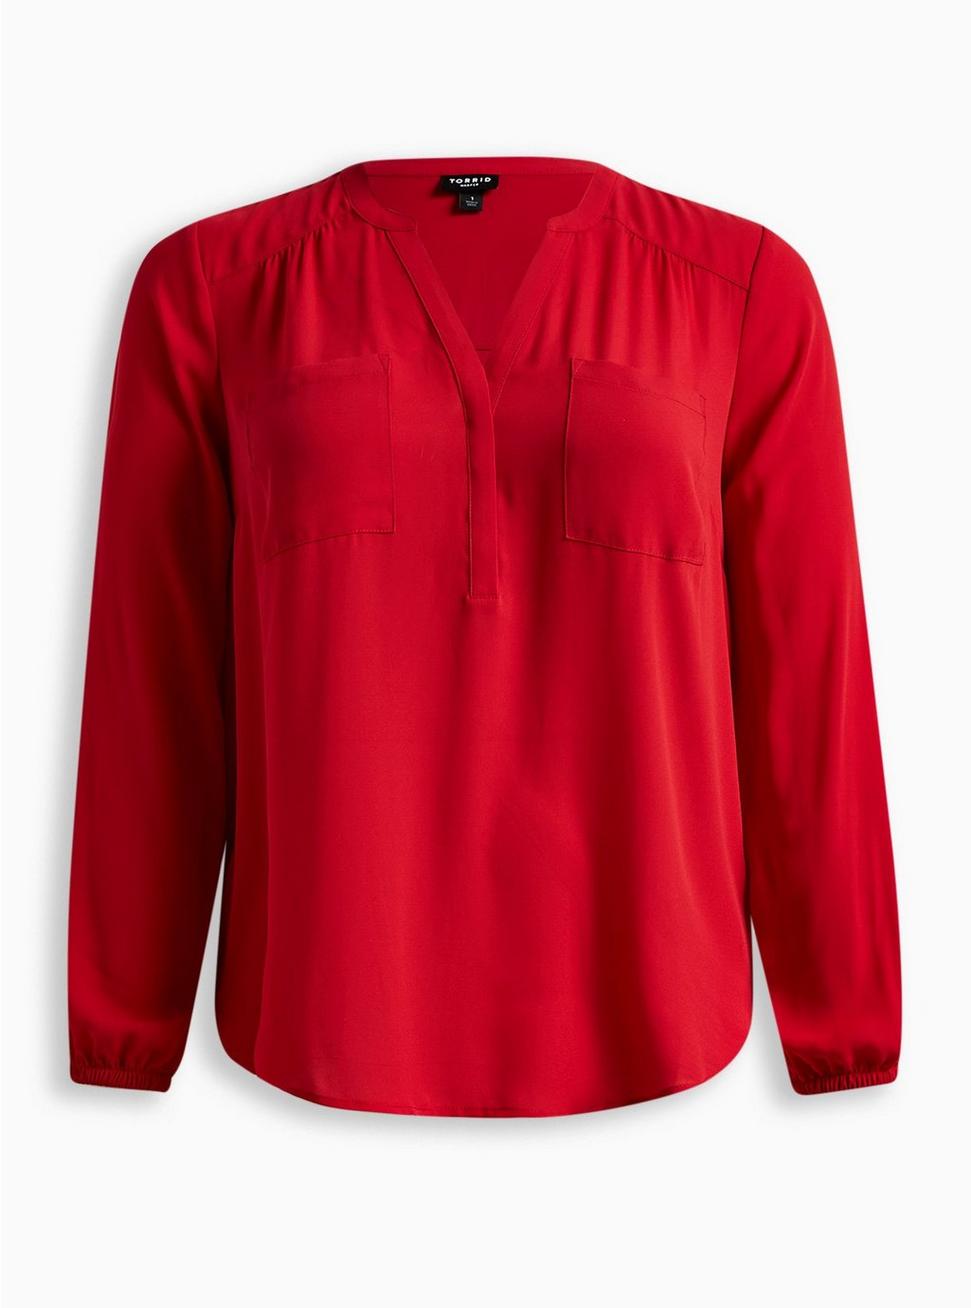 Harper Georgette Pullover Long Sleeve Blouse, LIPSTICK RED, hi-res